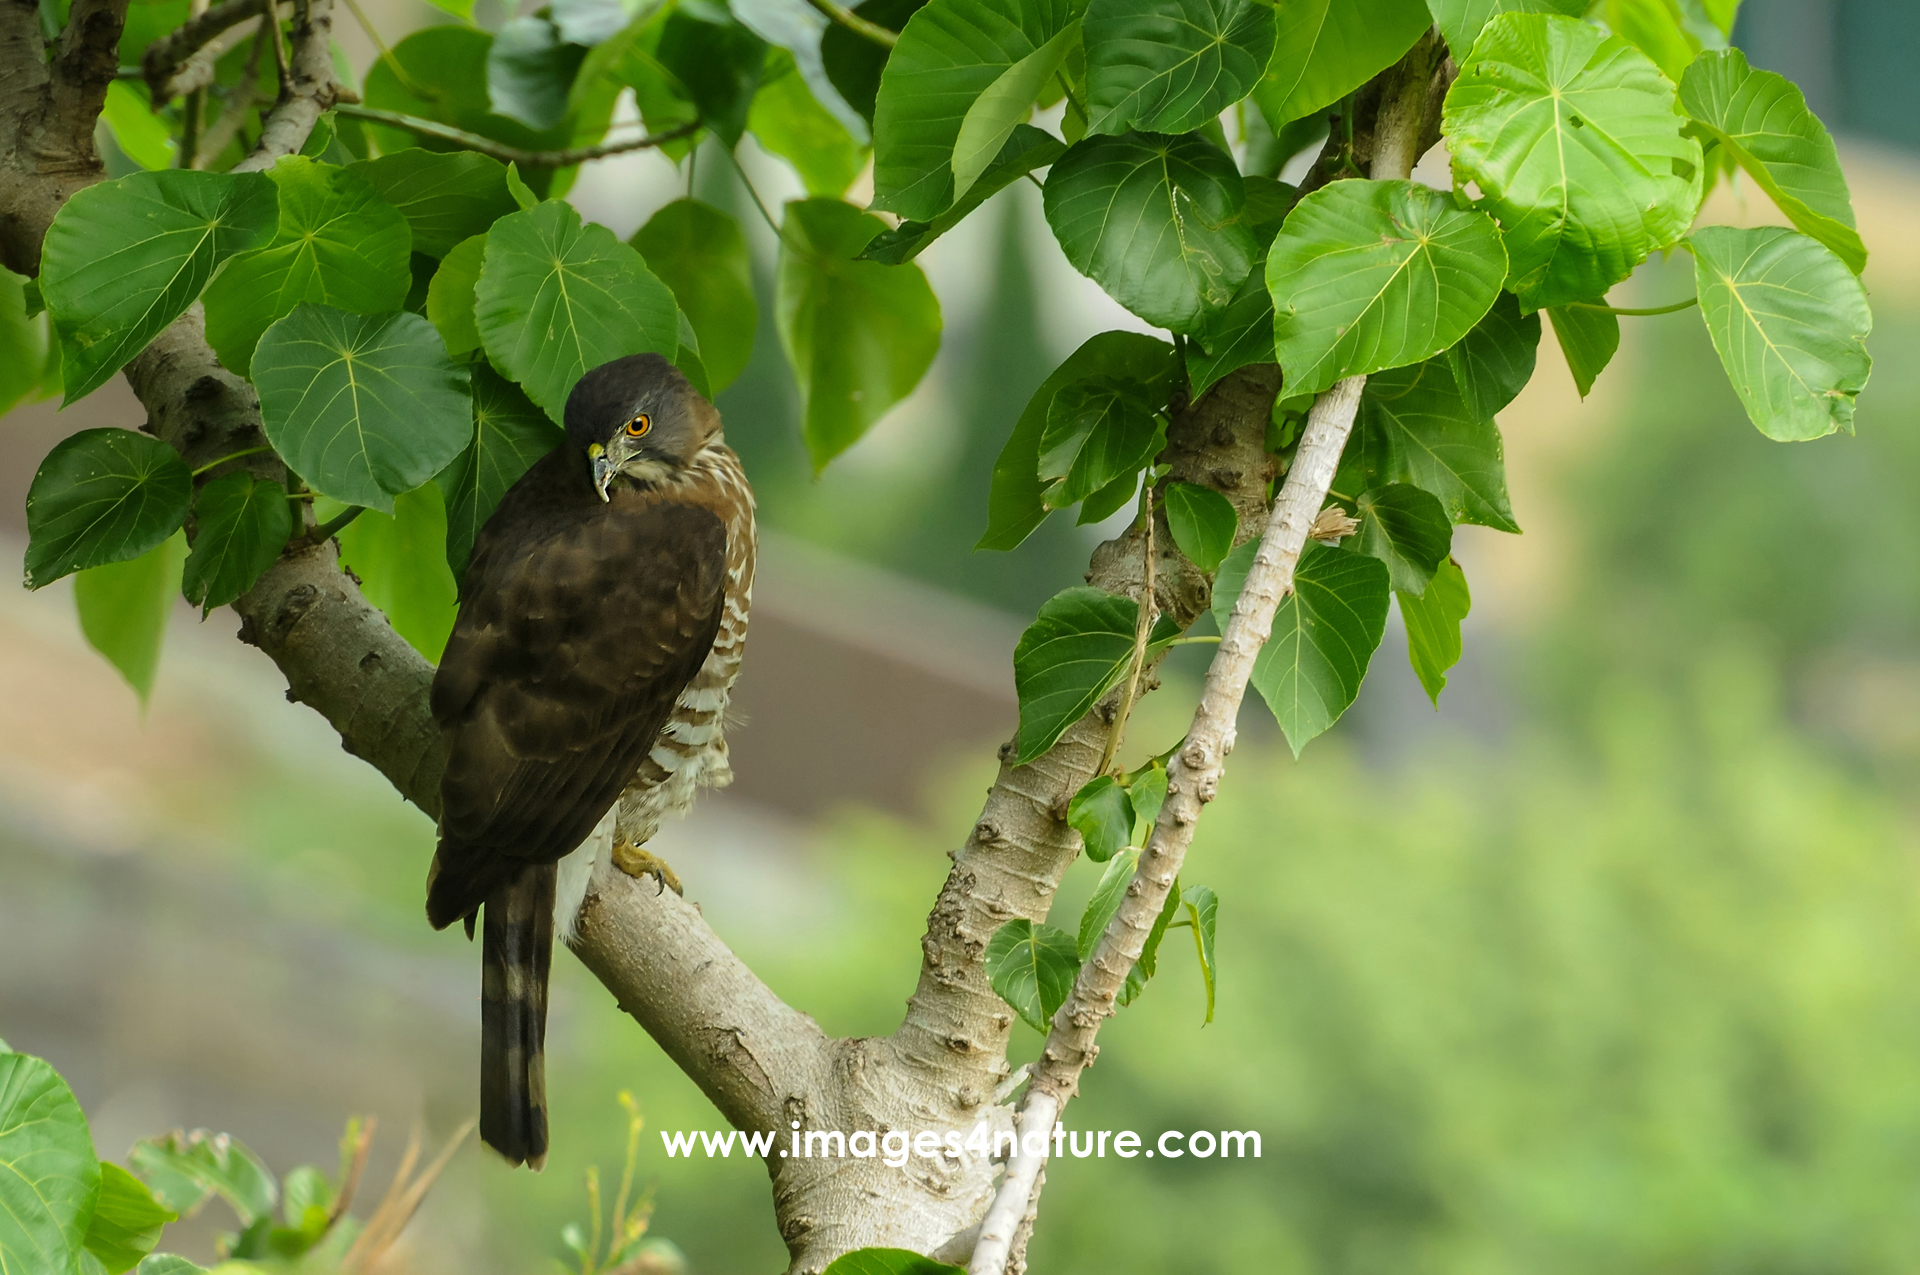 Closeup on bird of prey sitting in a tree